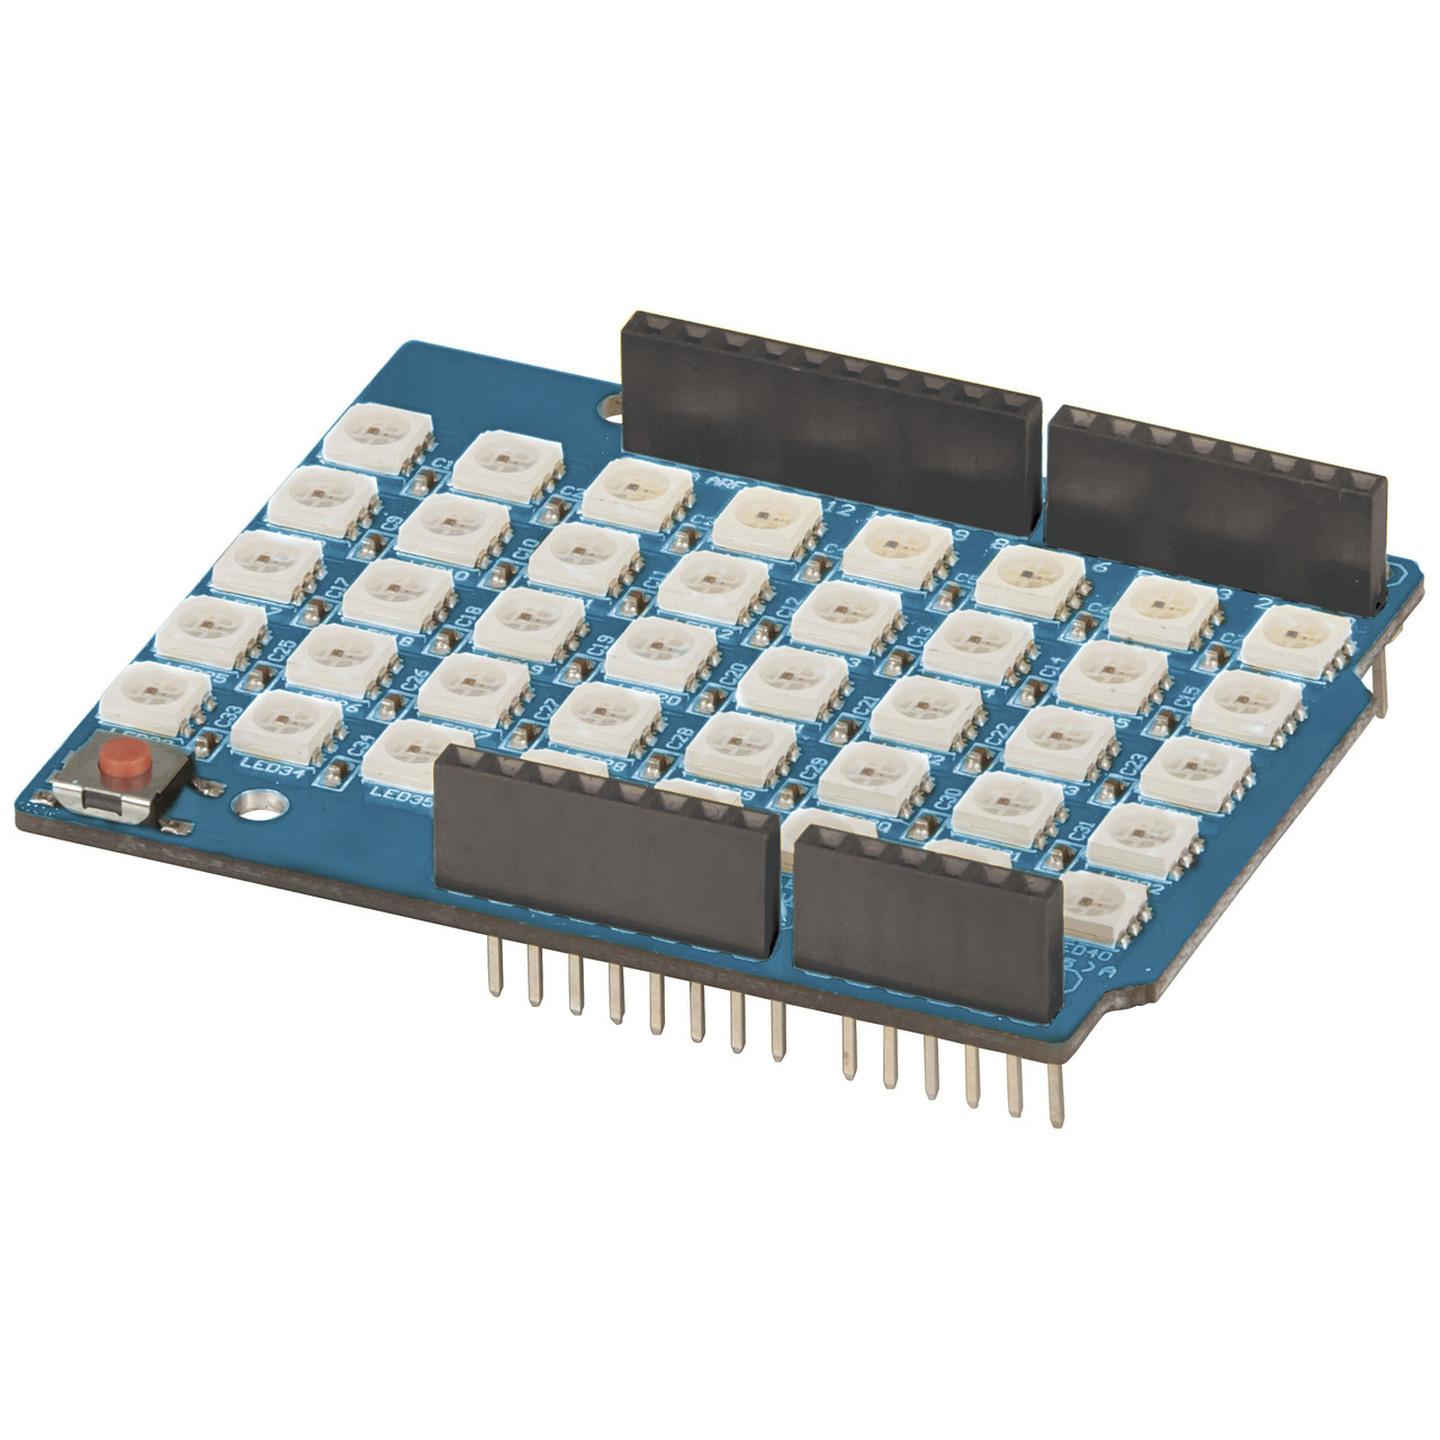 Duinotech Arduino Compatible 8 x 5 RGB LED Matrix Shield